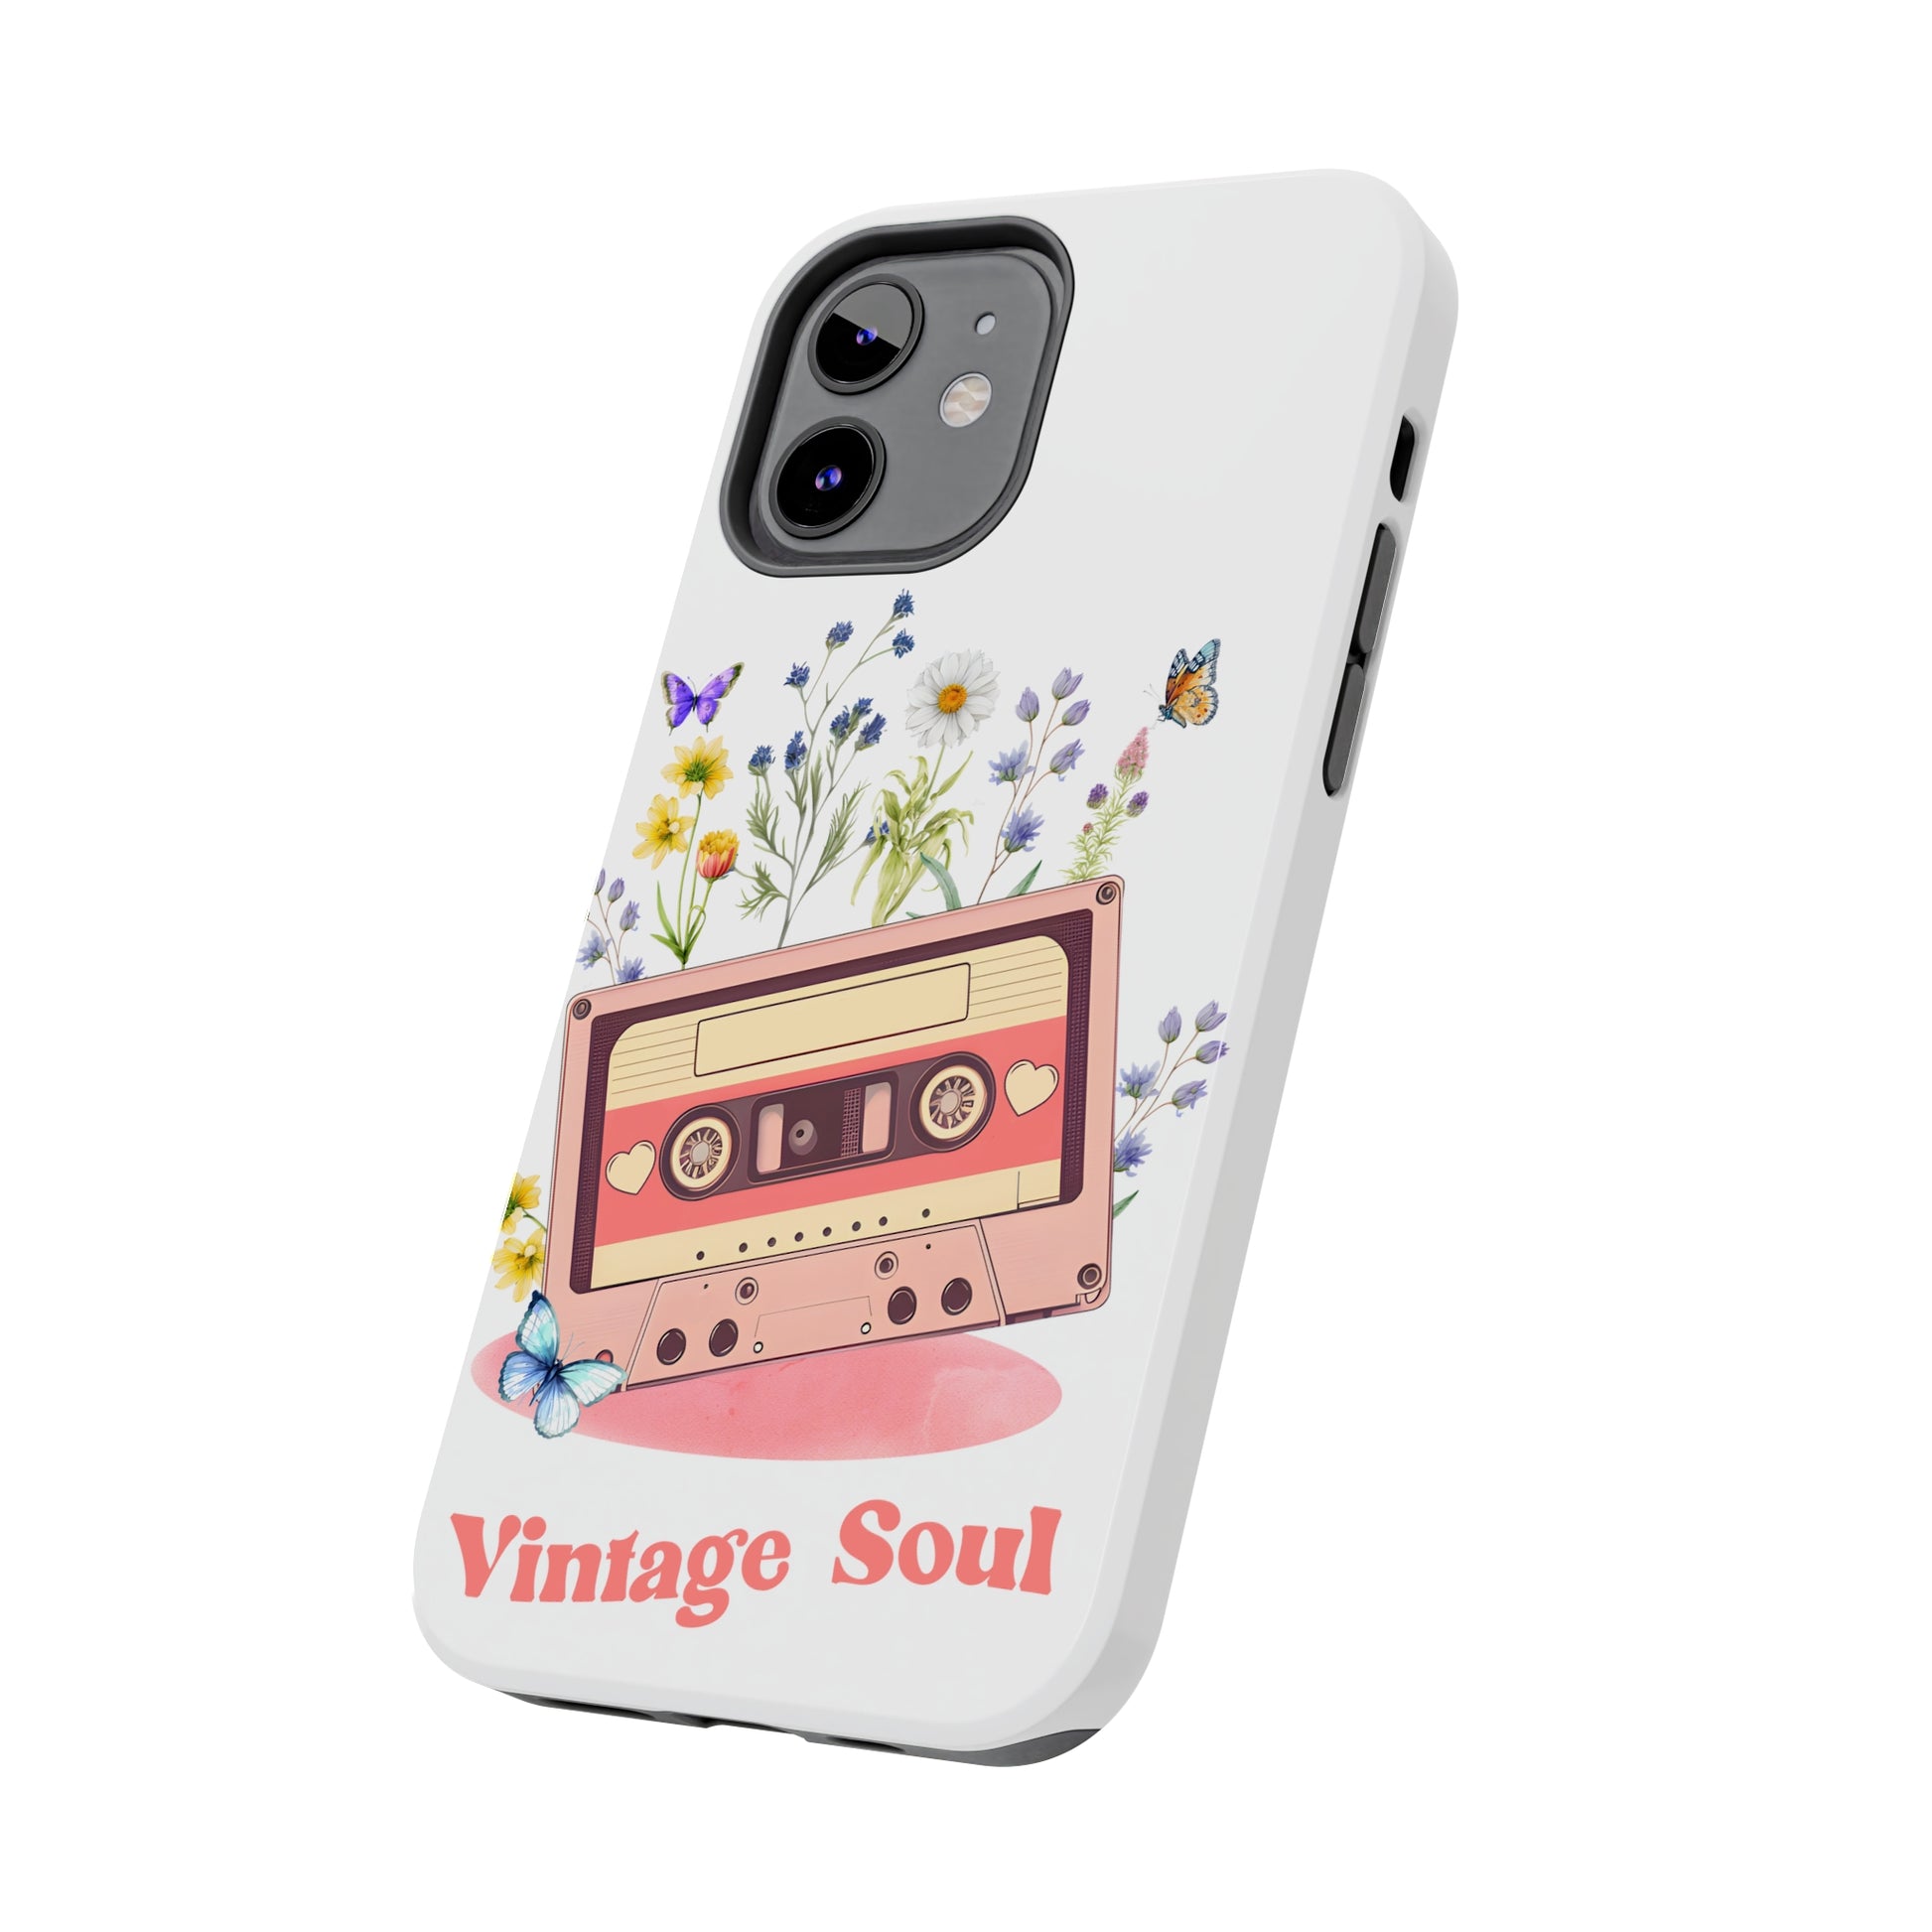 Vintage Soul: iPhone Tough Case Design - Wireless Charging - Superior Protection - Original Designs by TheGlassyLass.com